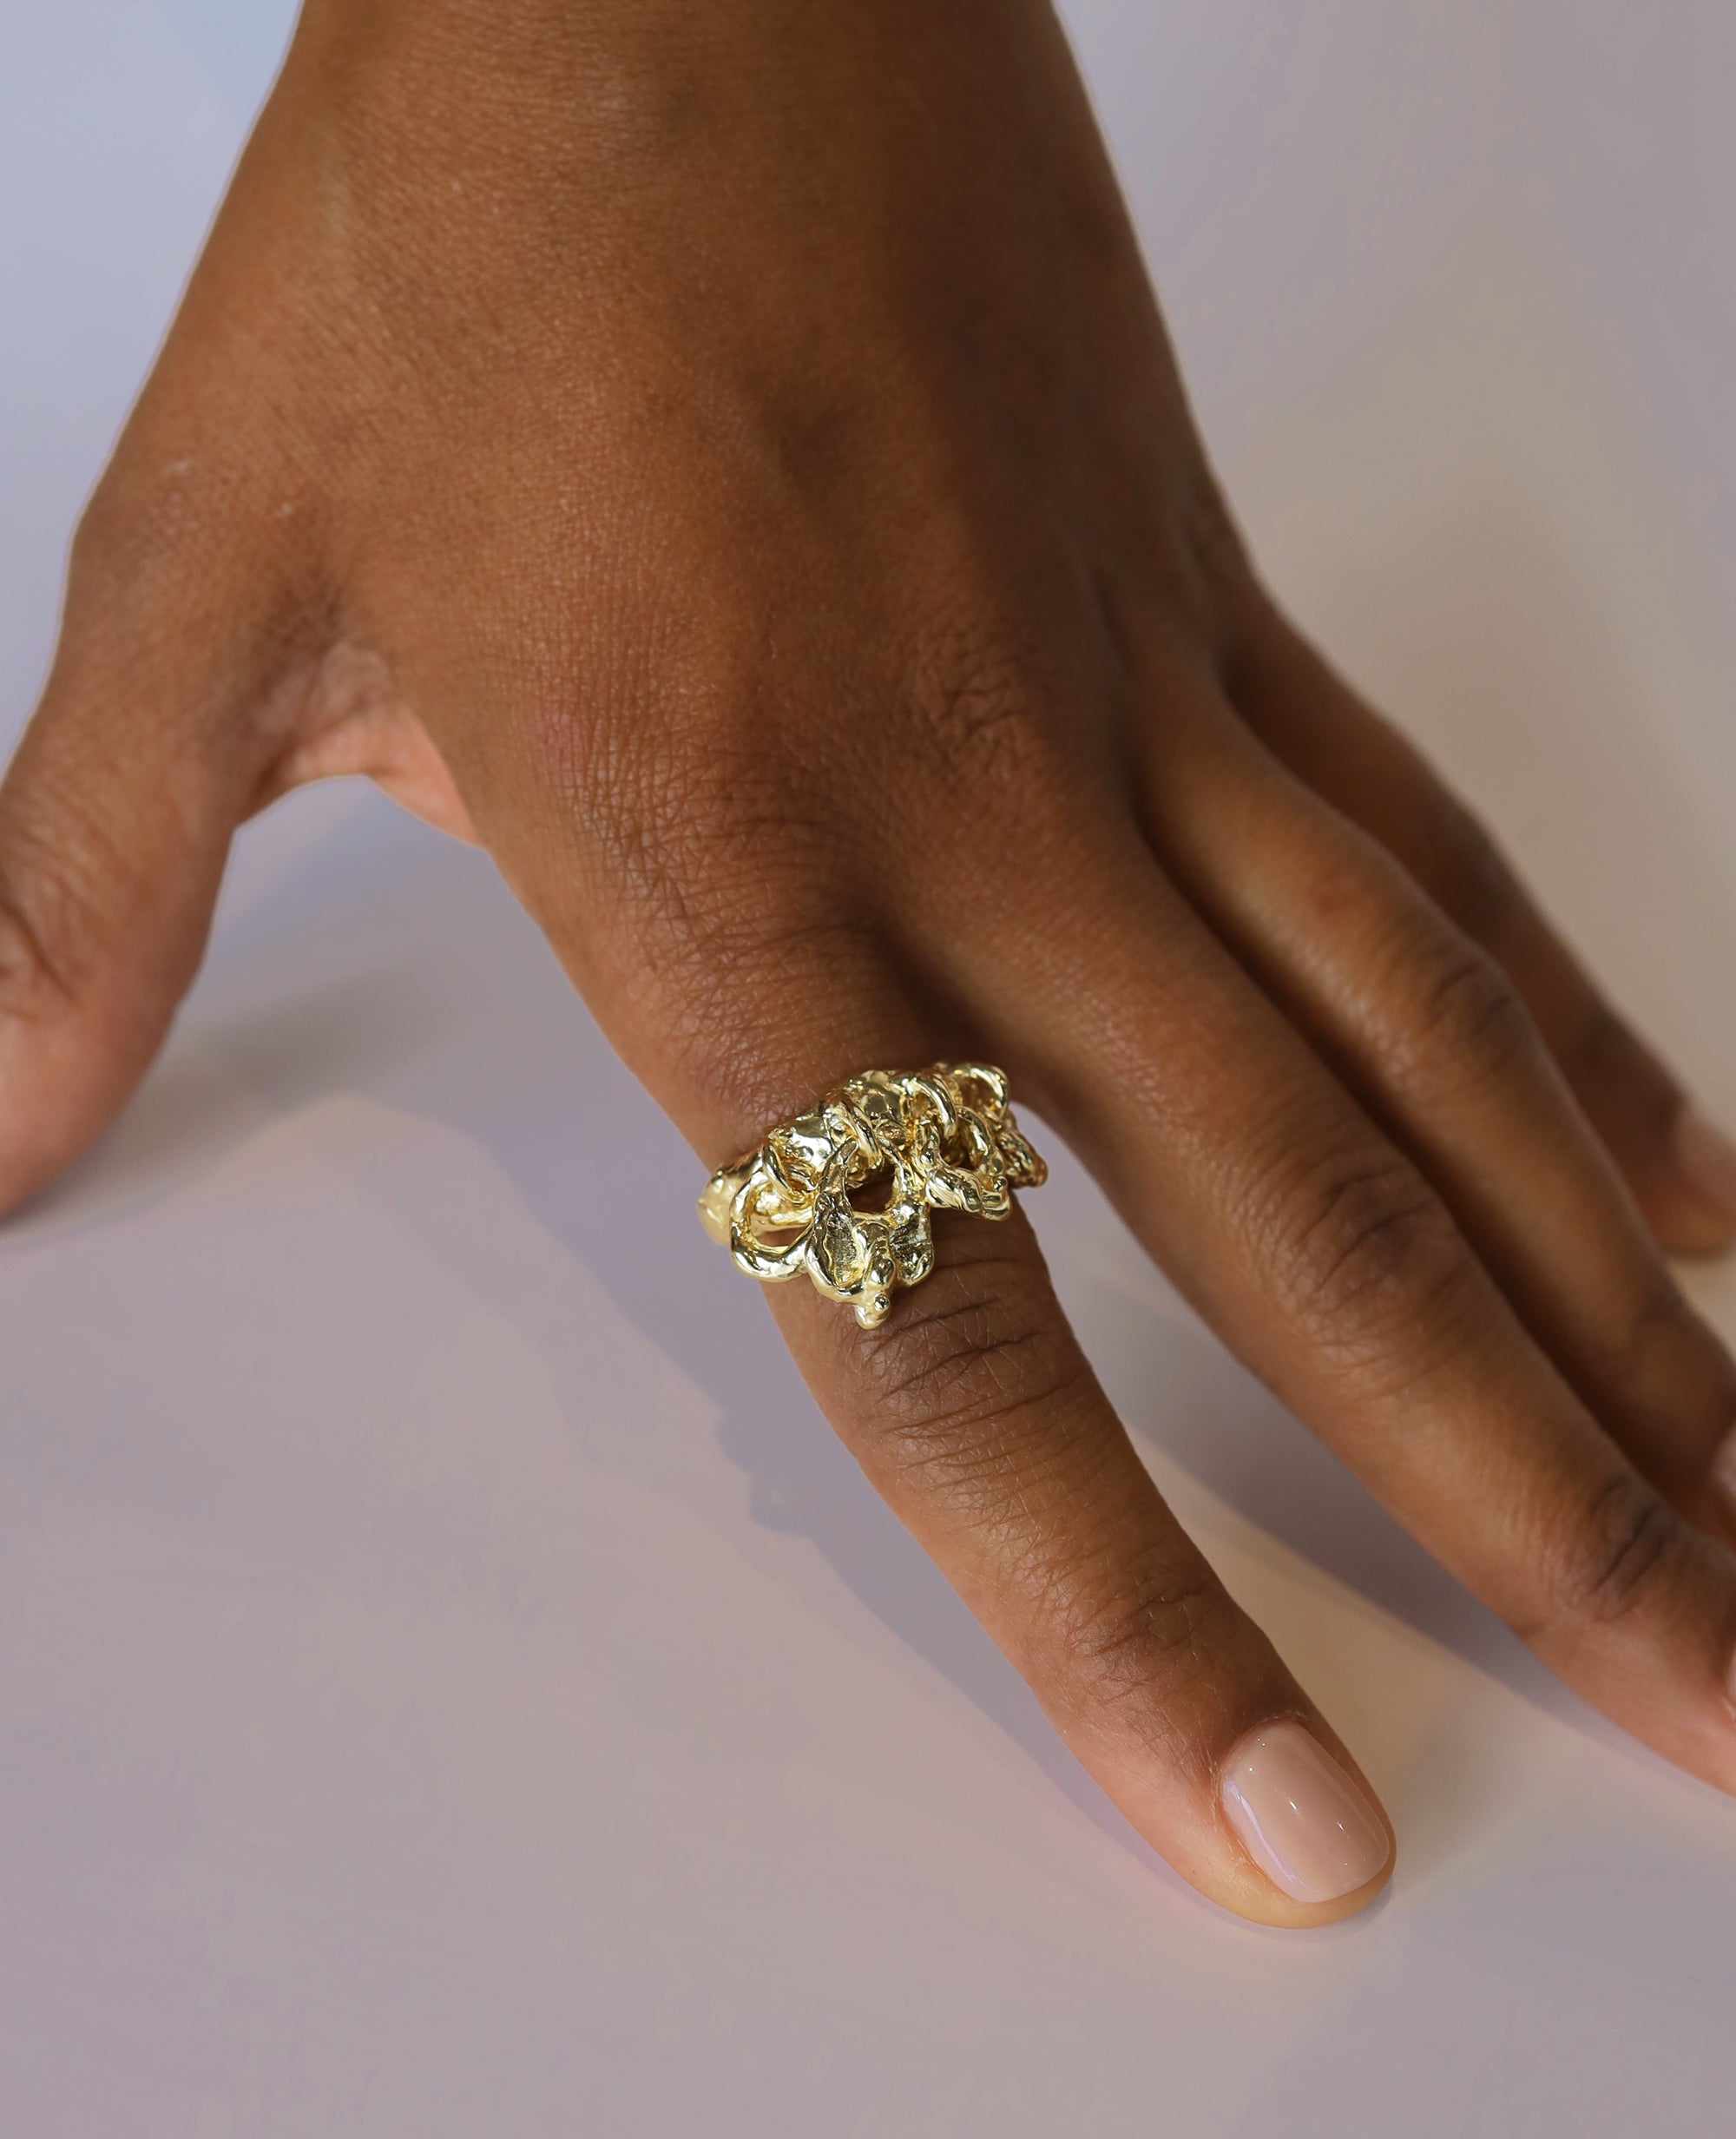 LIQUID NODULES // golden ring - ORA-C jewelry - handmade jewelry by Montreal based independent designer Caroline Pham